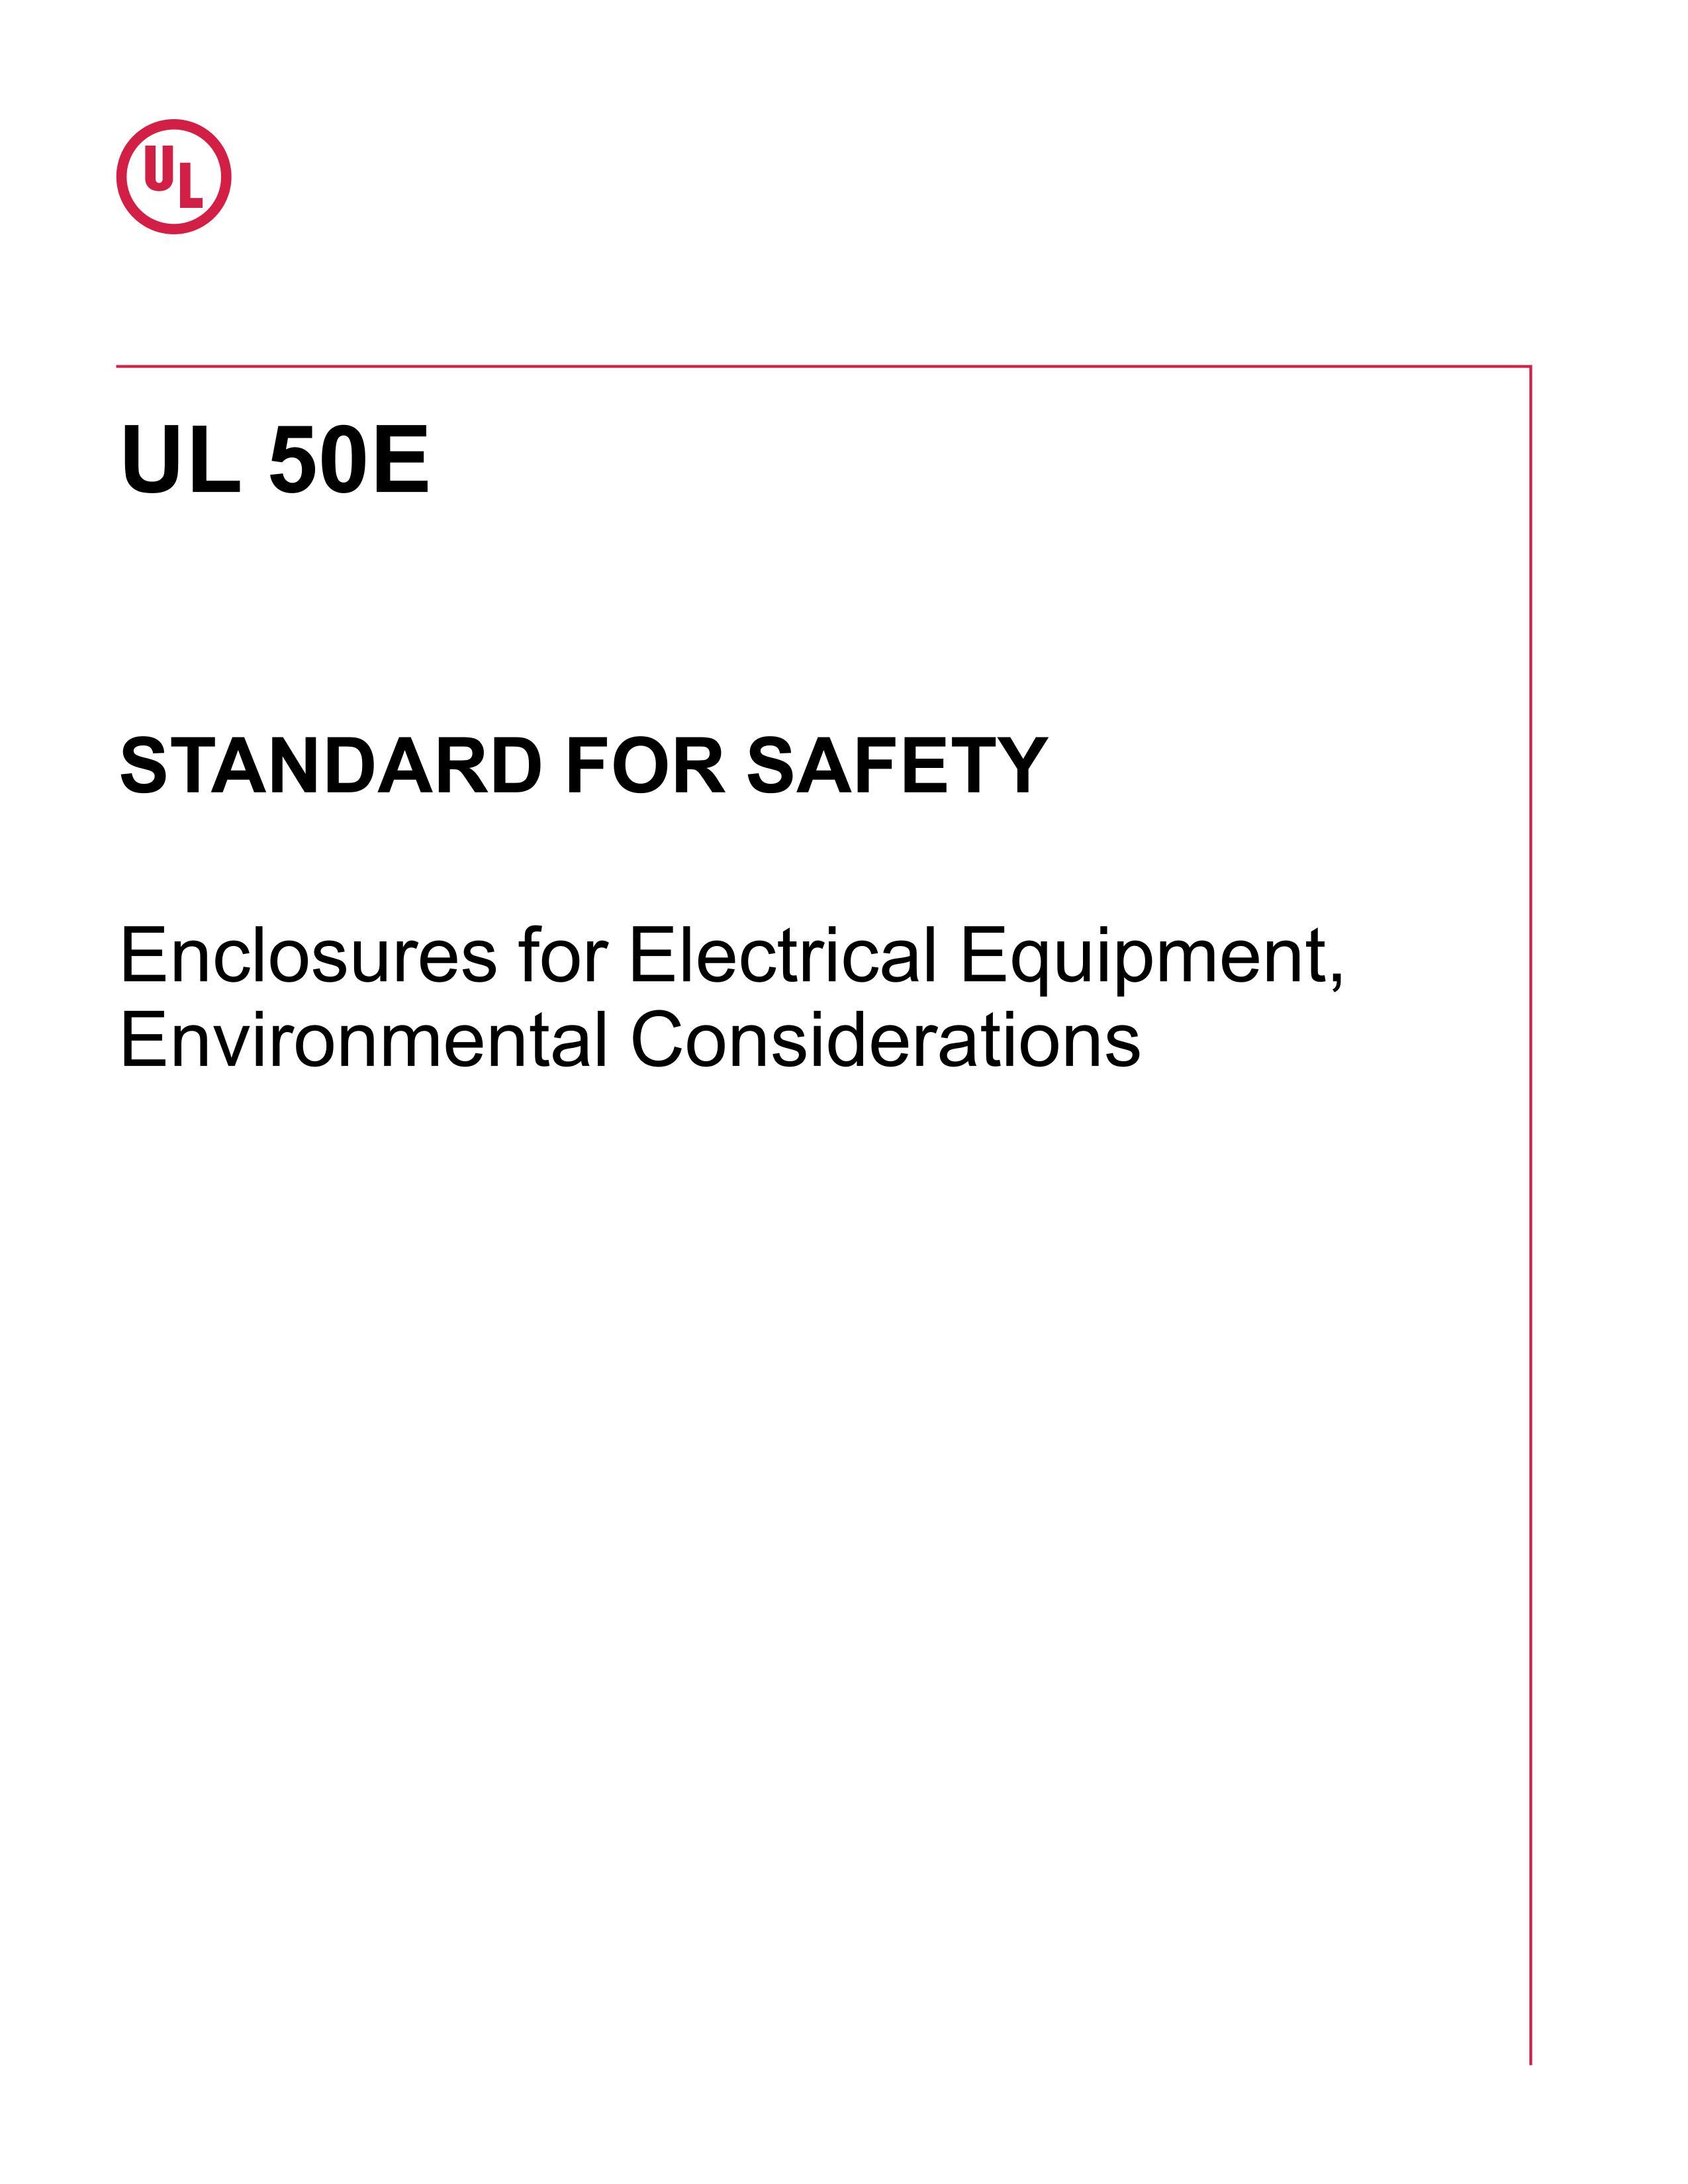 UL 50E-2020 Enclosures for Electrical Equipment, Environmental Considerations.pdf1ҳ